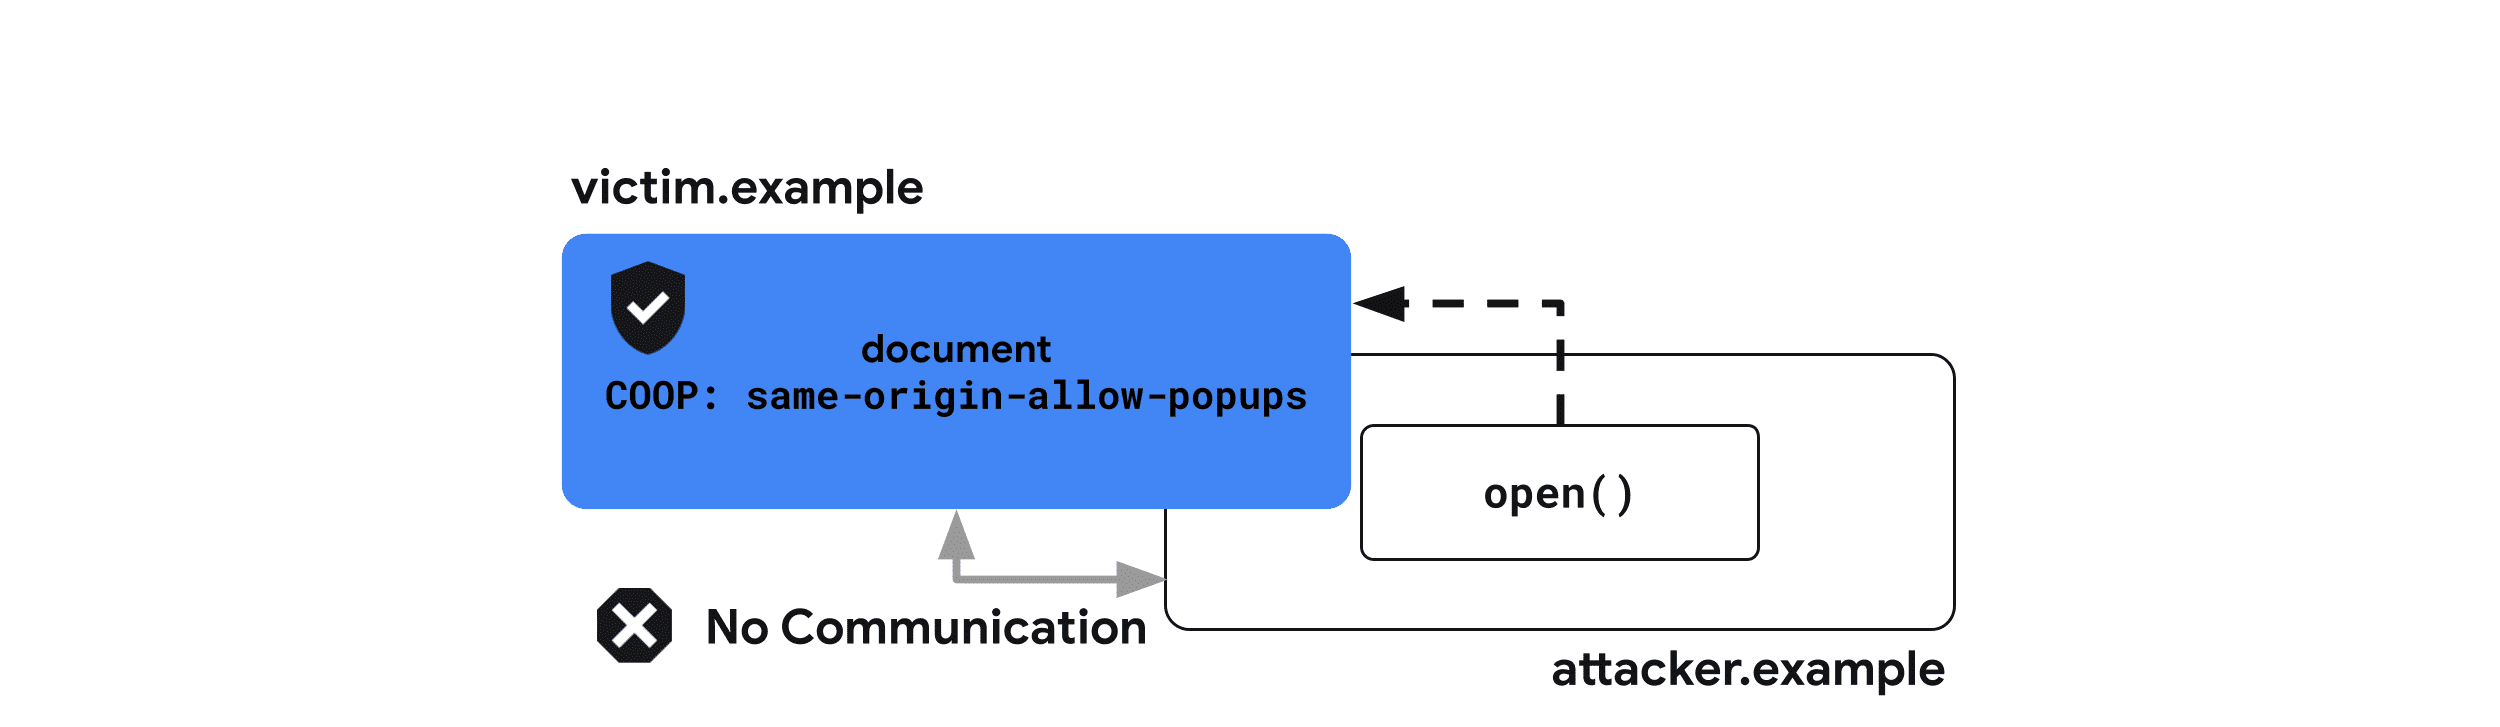 Cross-Origin-Opener-Policy: same-origin-allow-popups